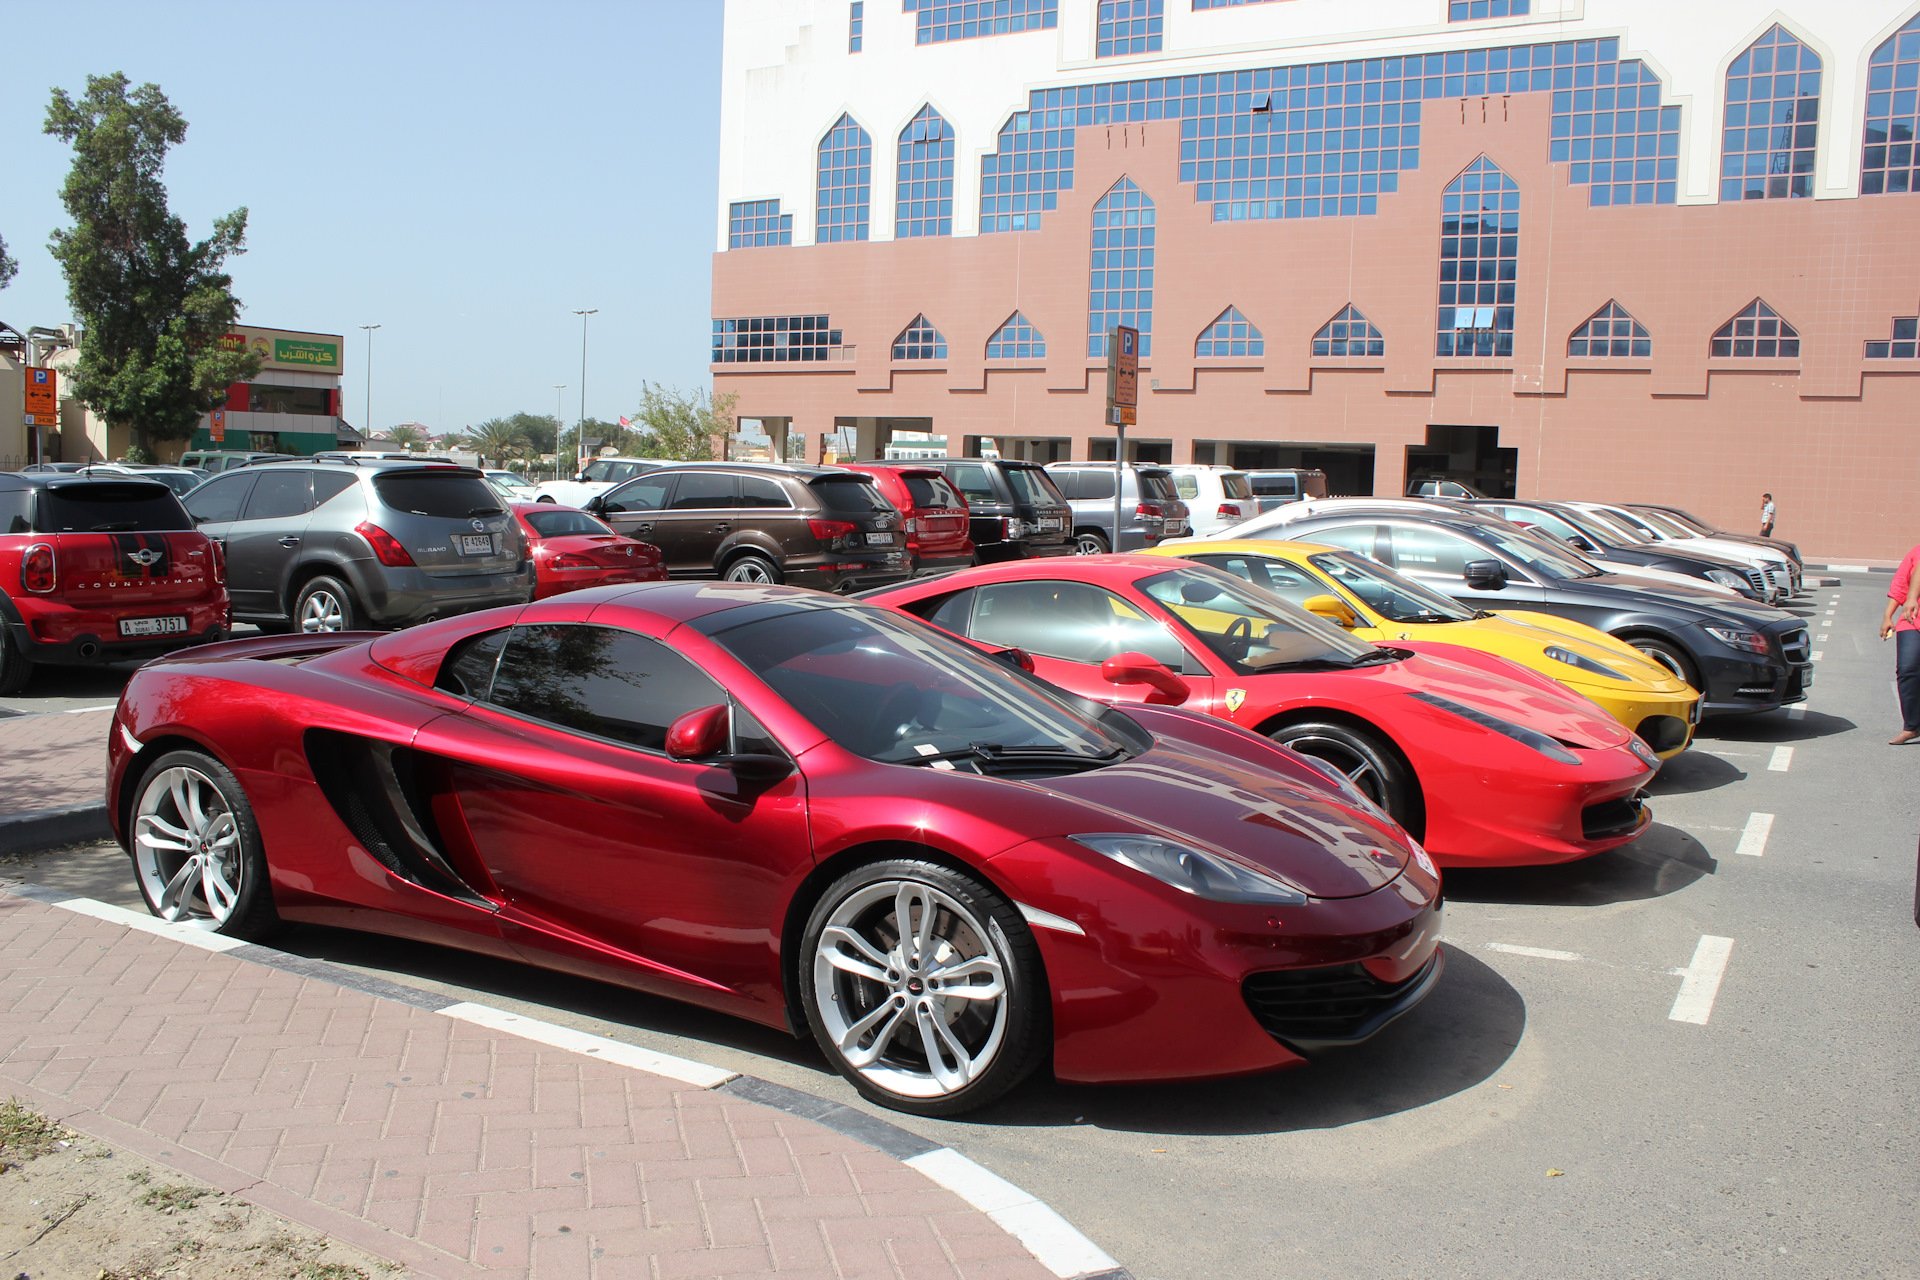 Uae cars. Дубай машины. Автомобили в Дубае. Суперкары. Суперкары в Дубае.